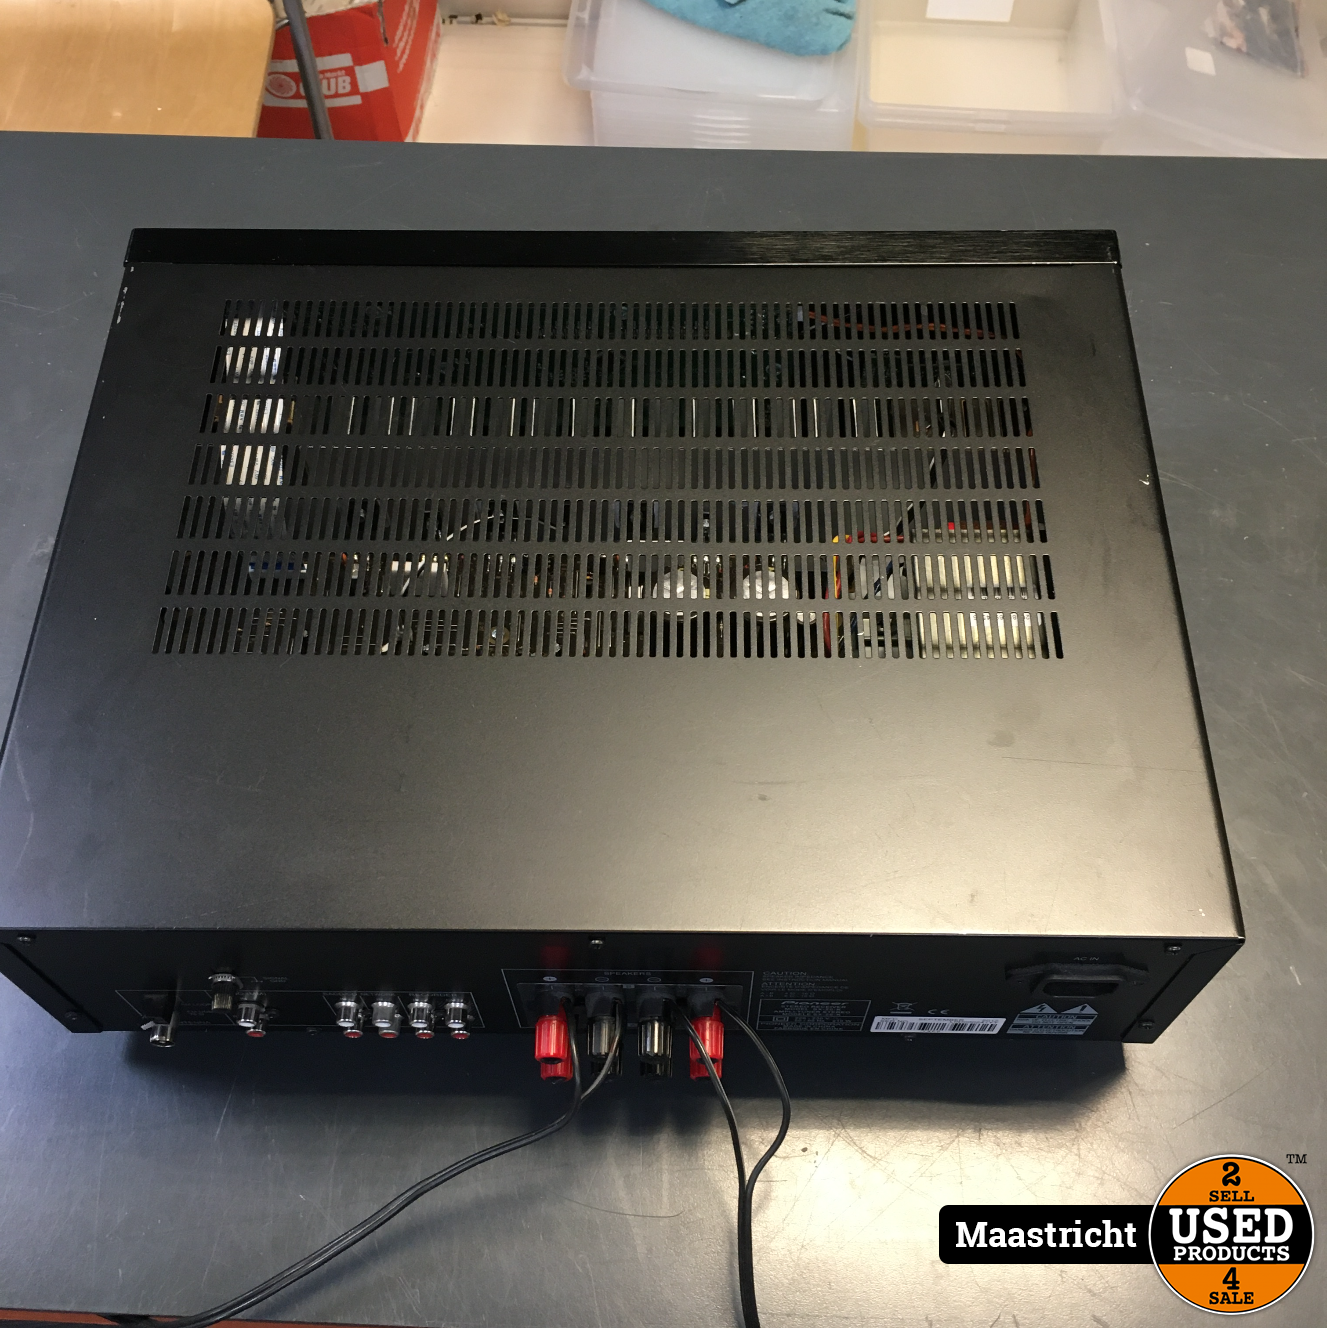 kopen Penetratie wenkbrauw PIONEER SX-20 High-End stereo receiver met netwerk en Phono aansluiting -  Used Products Maasstricht